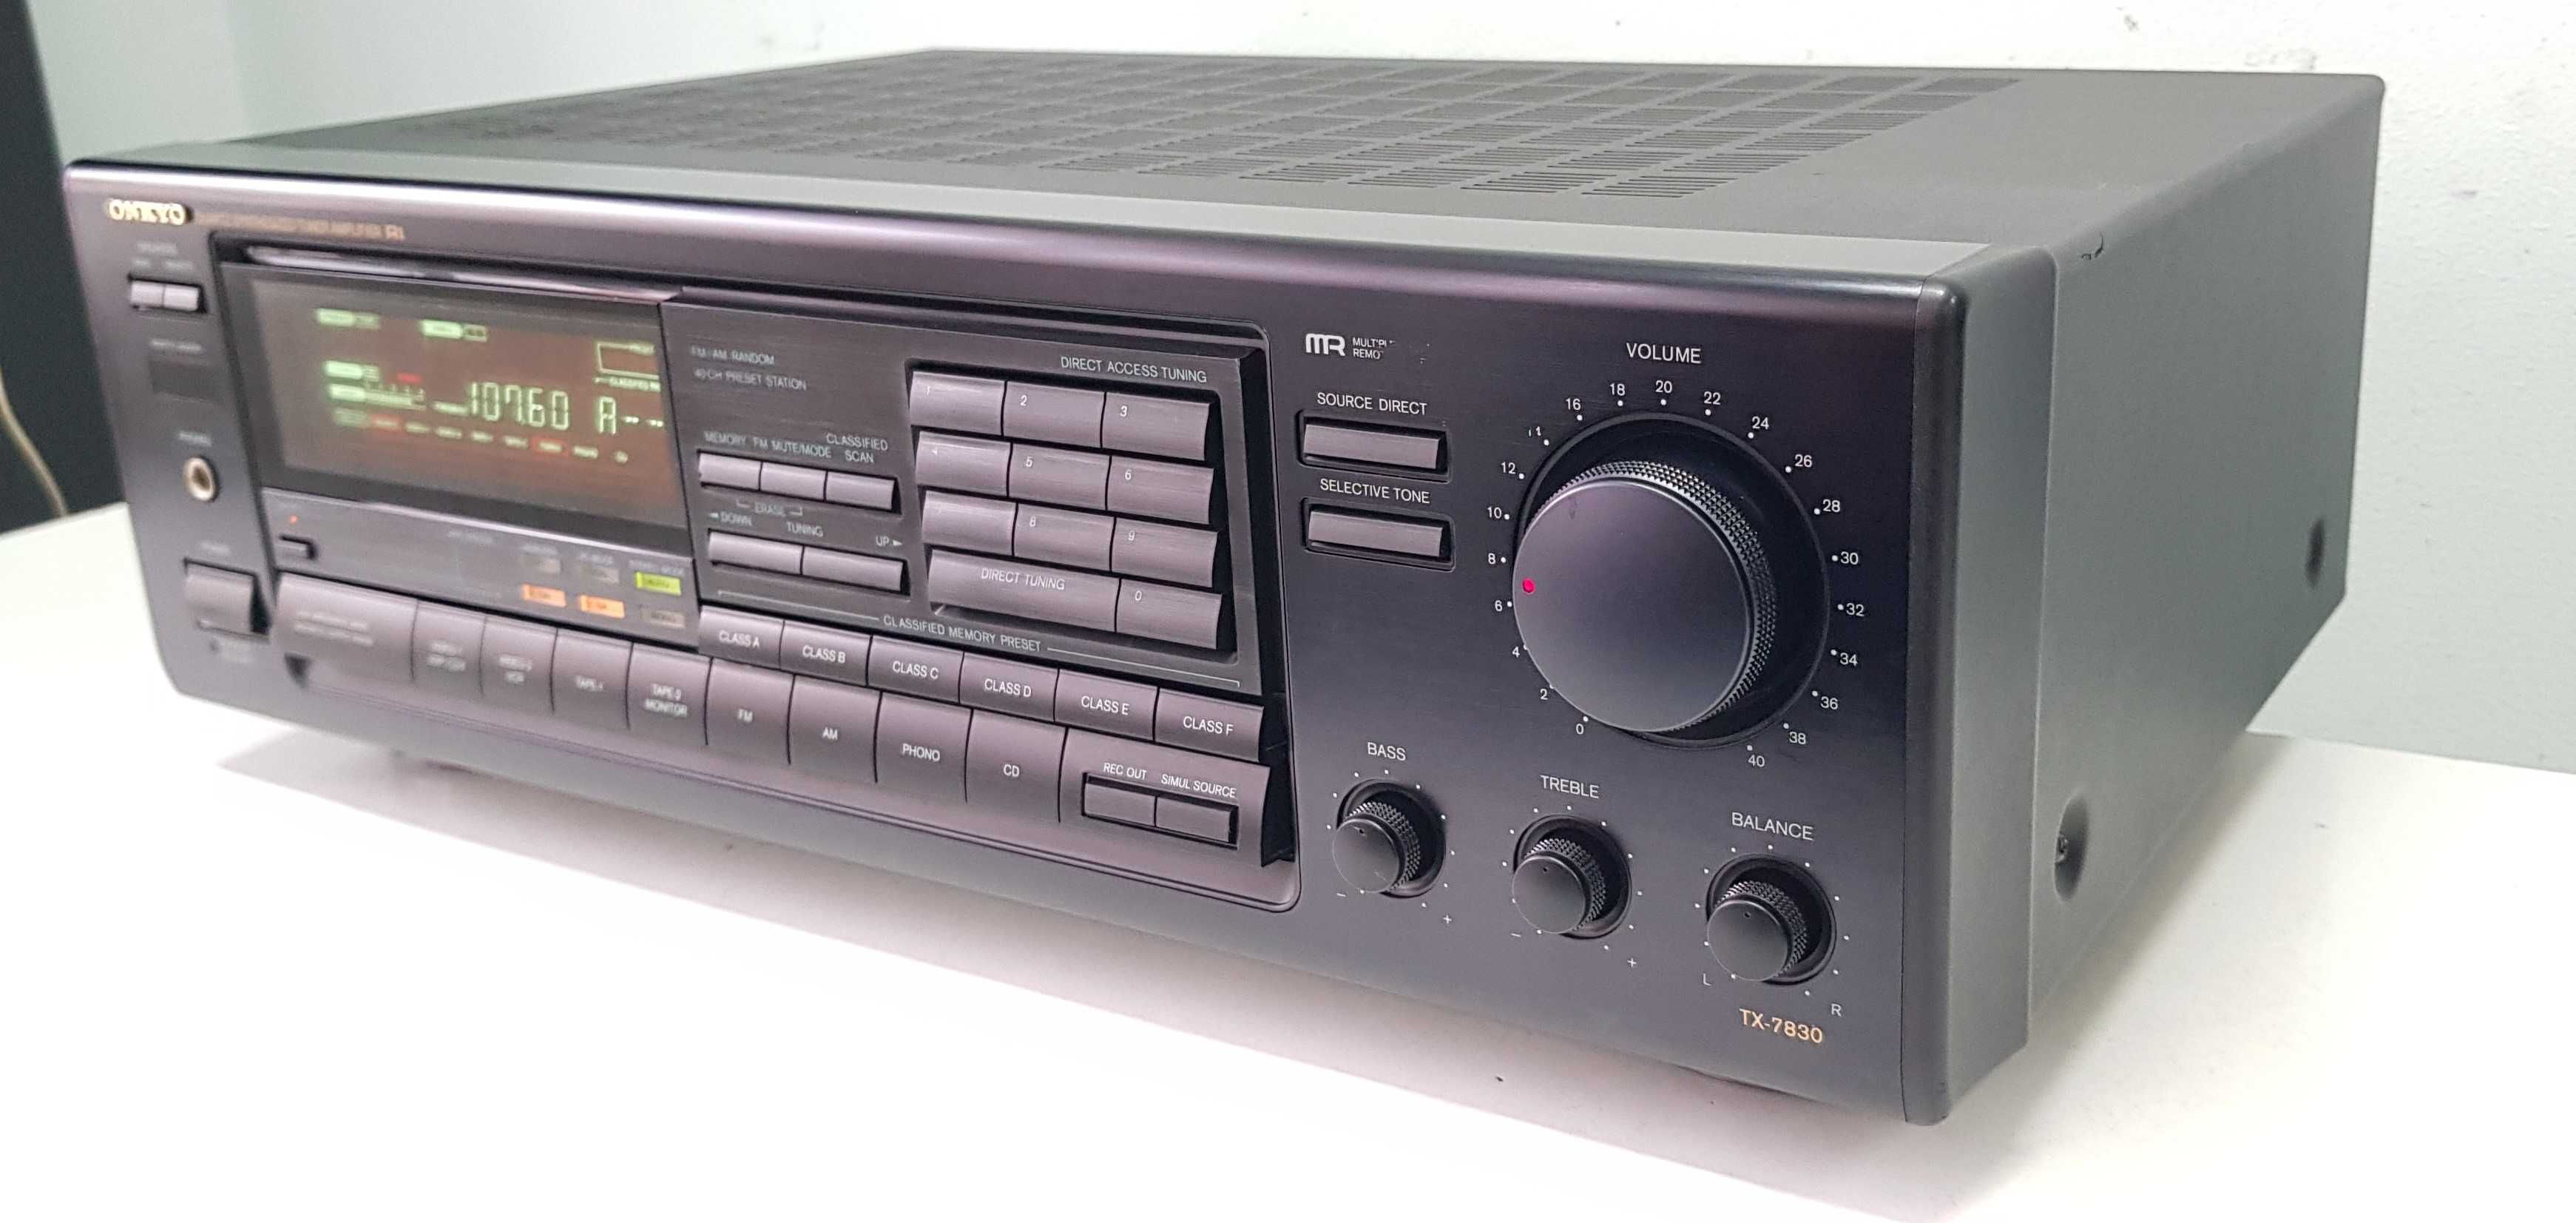 ONKYO TX 7830 amplificator amplituner stereo arta muzica film